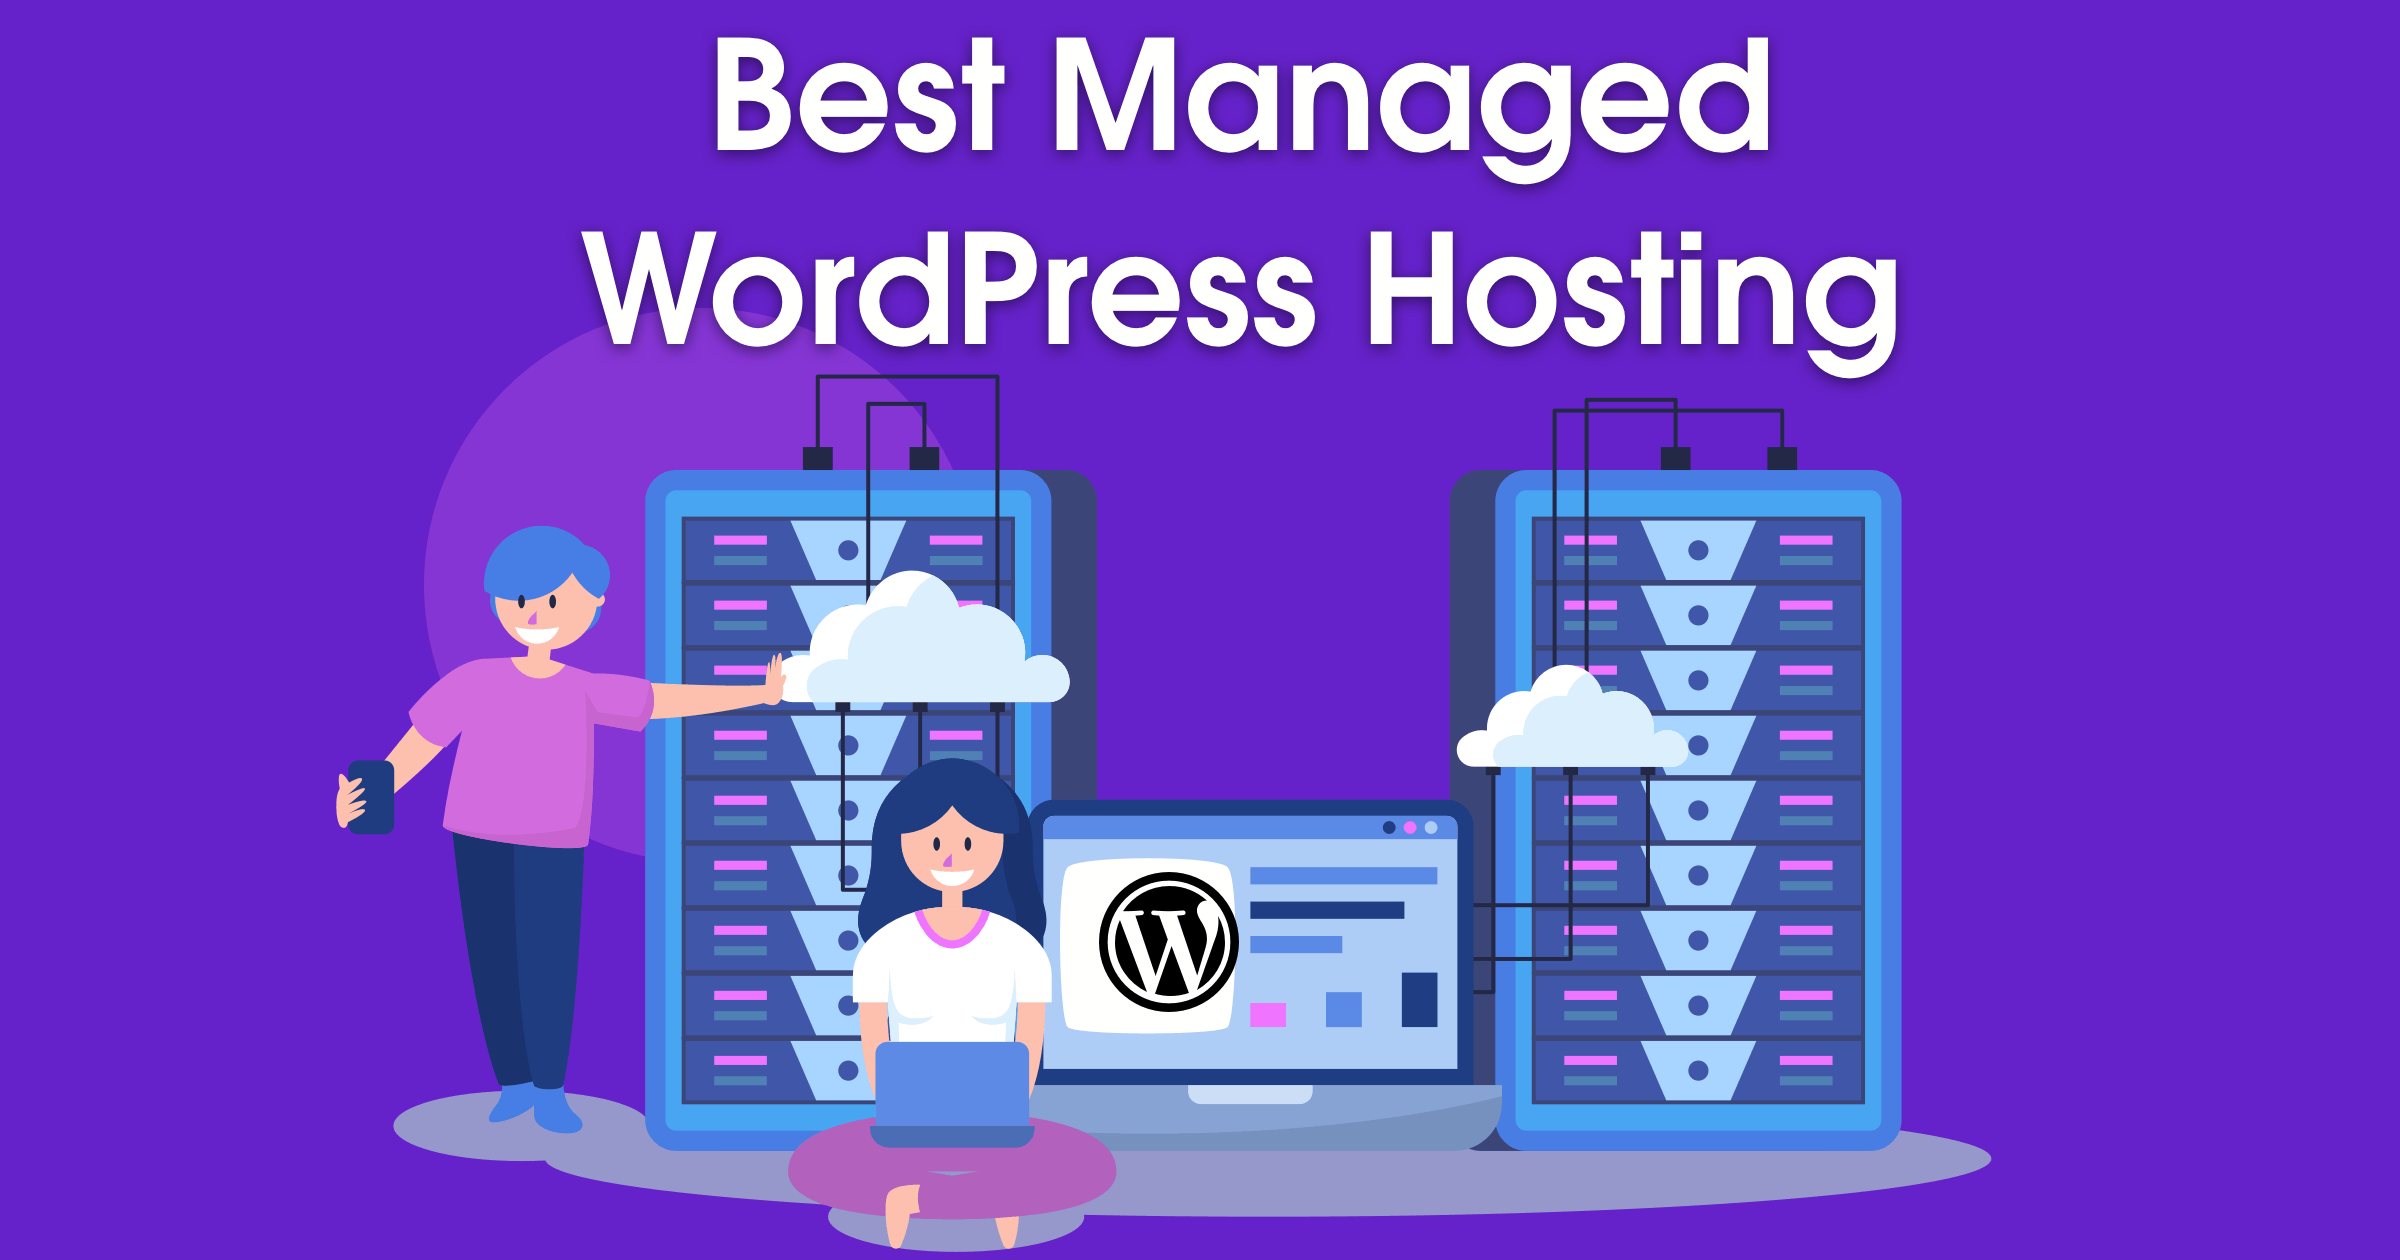 Wordpress host